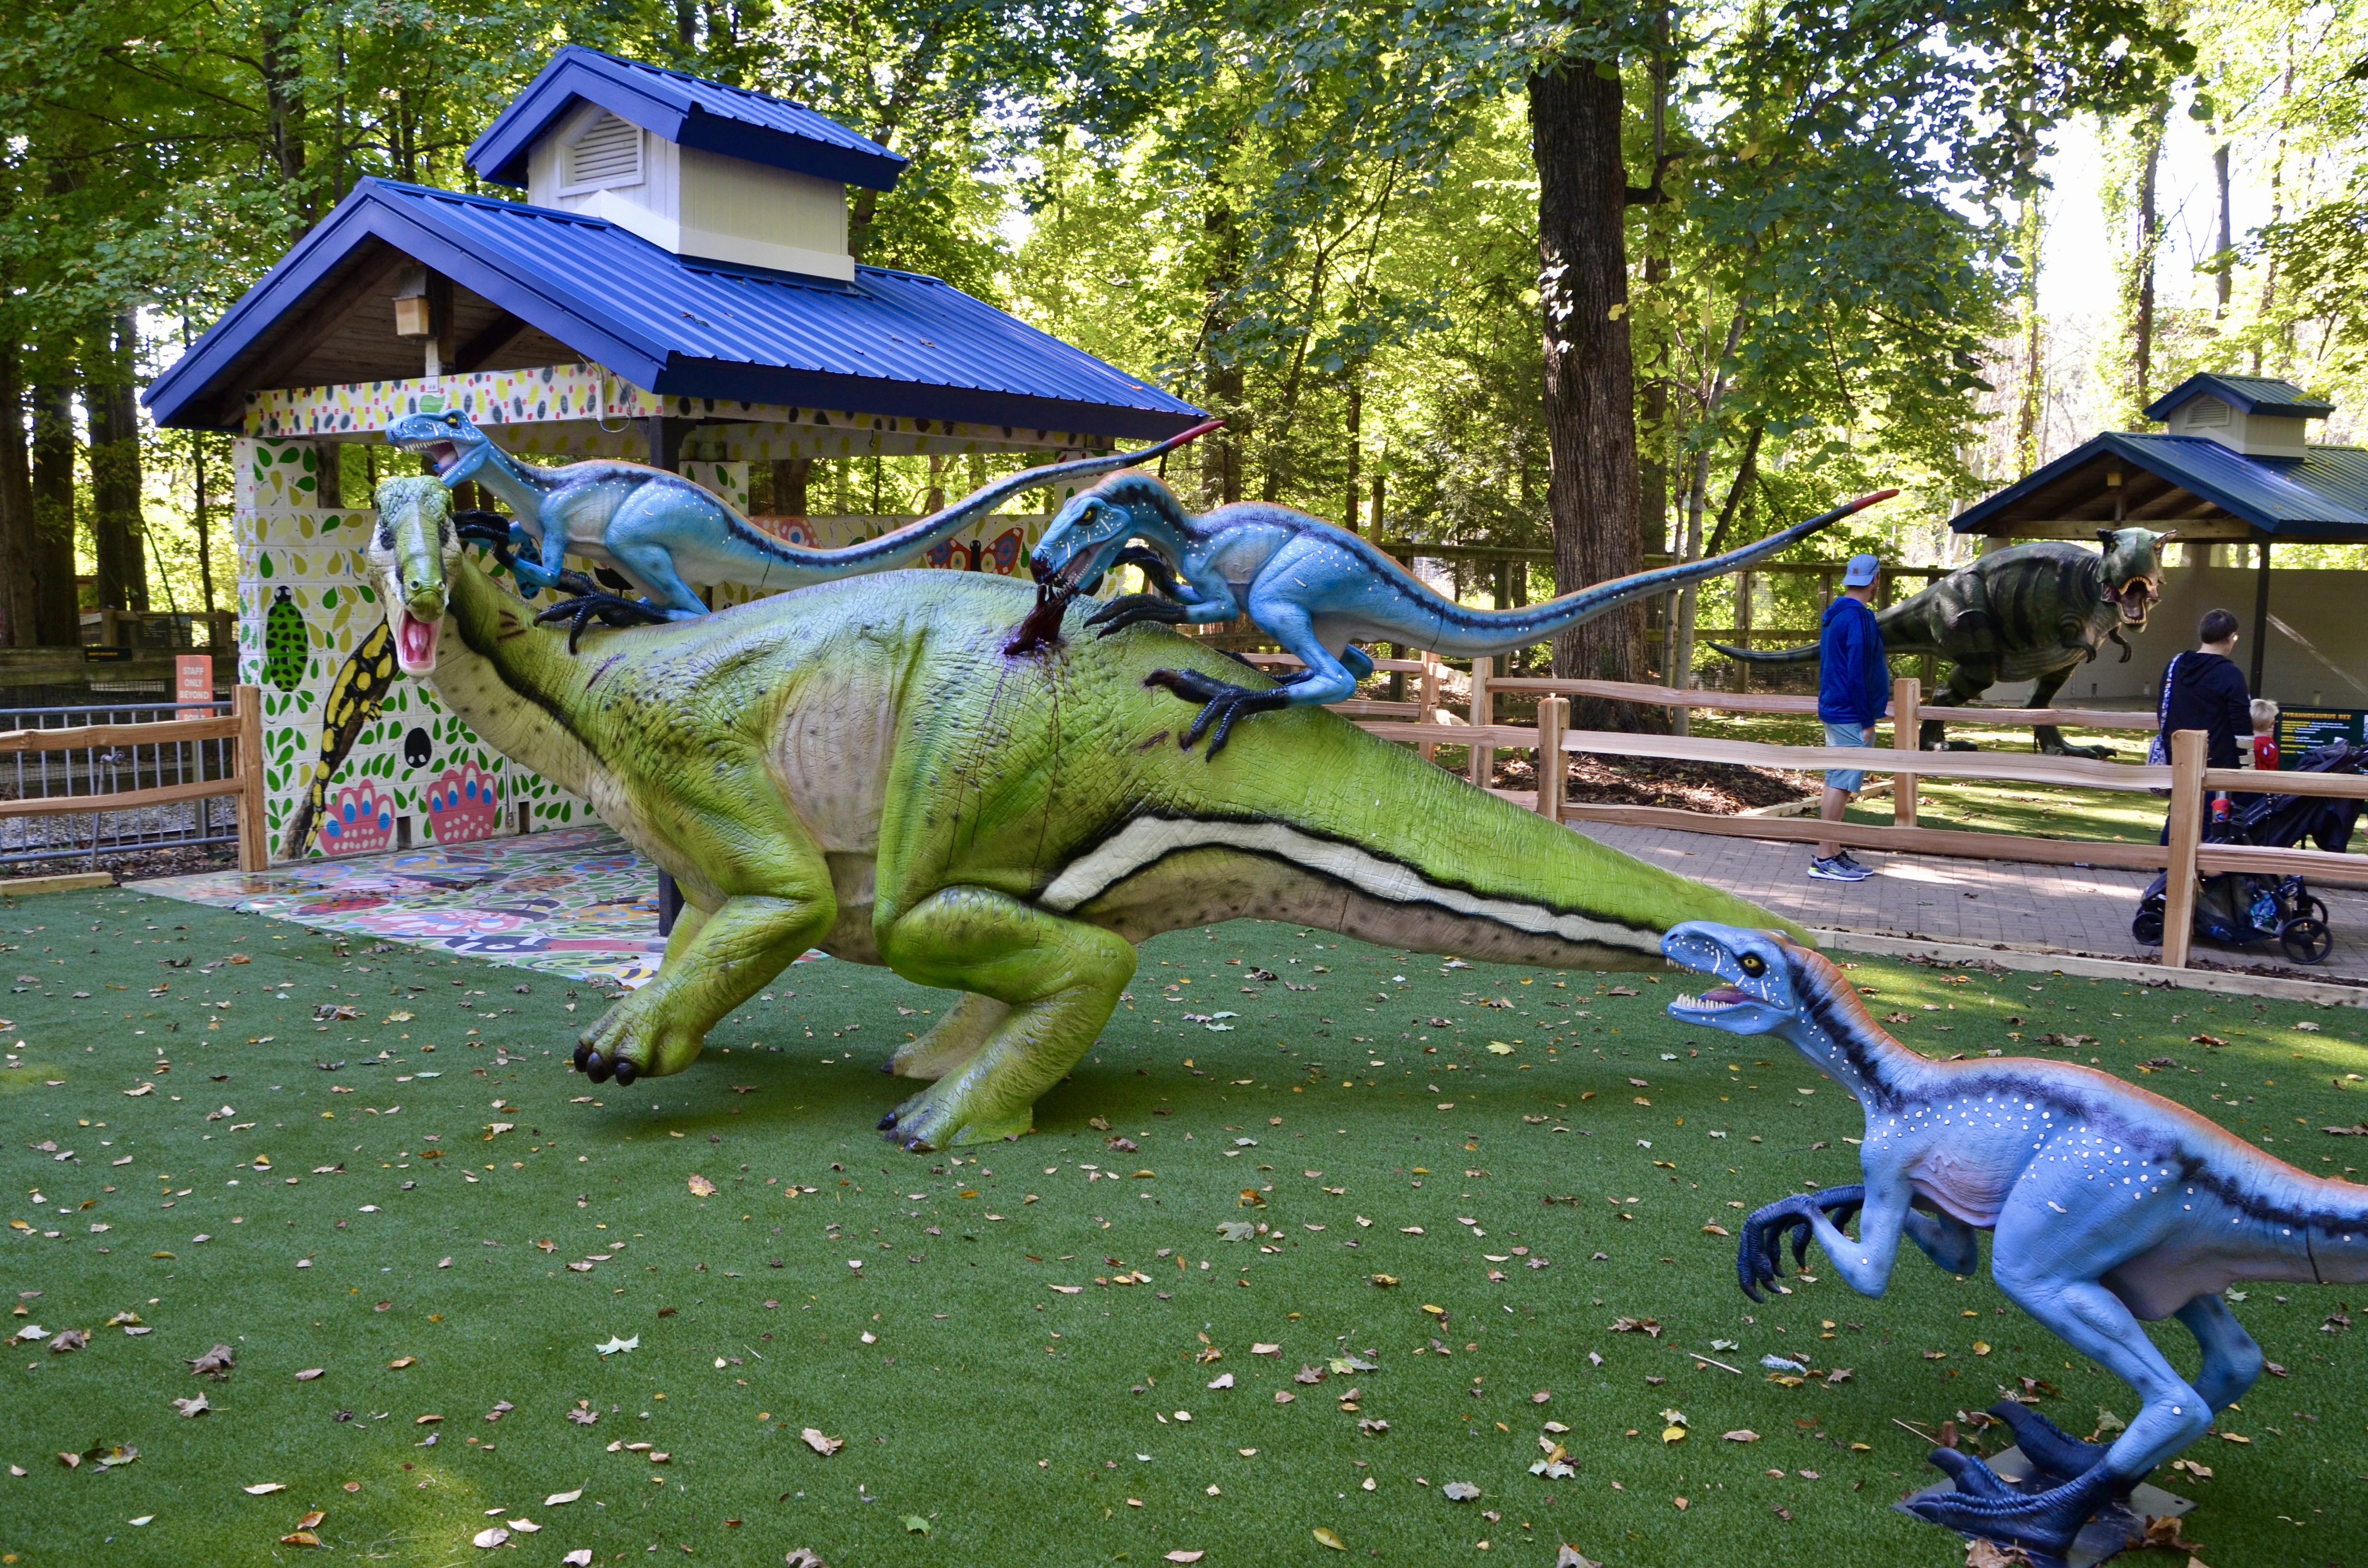 Zoorassic Park Binder Park Zoo Dinosaur Attack